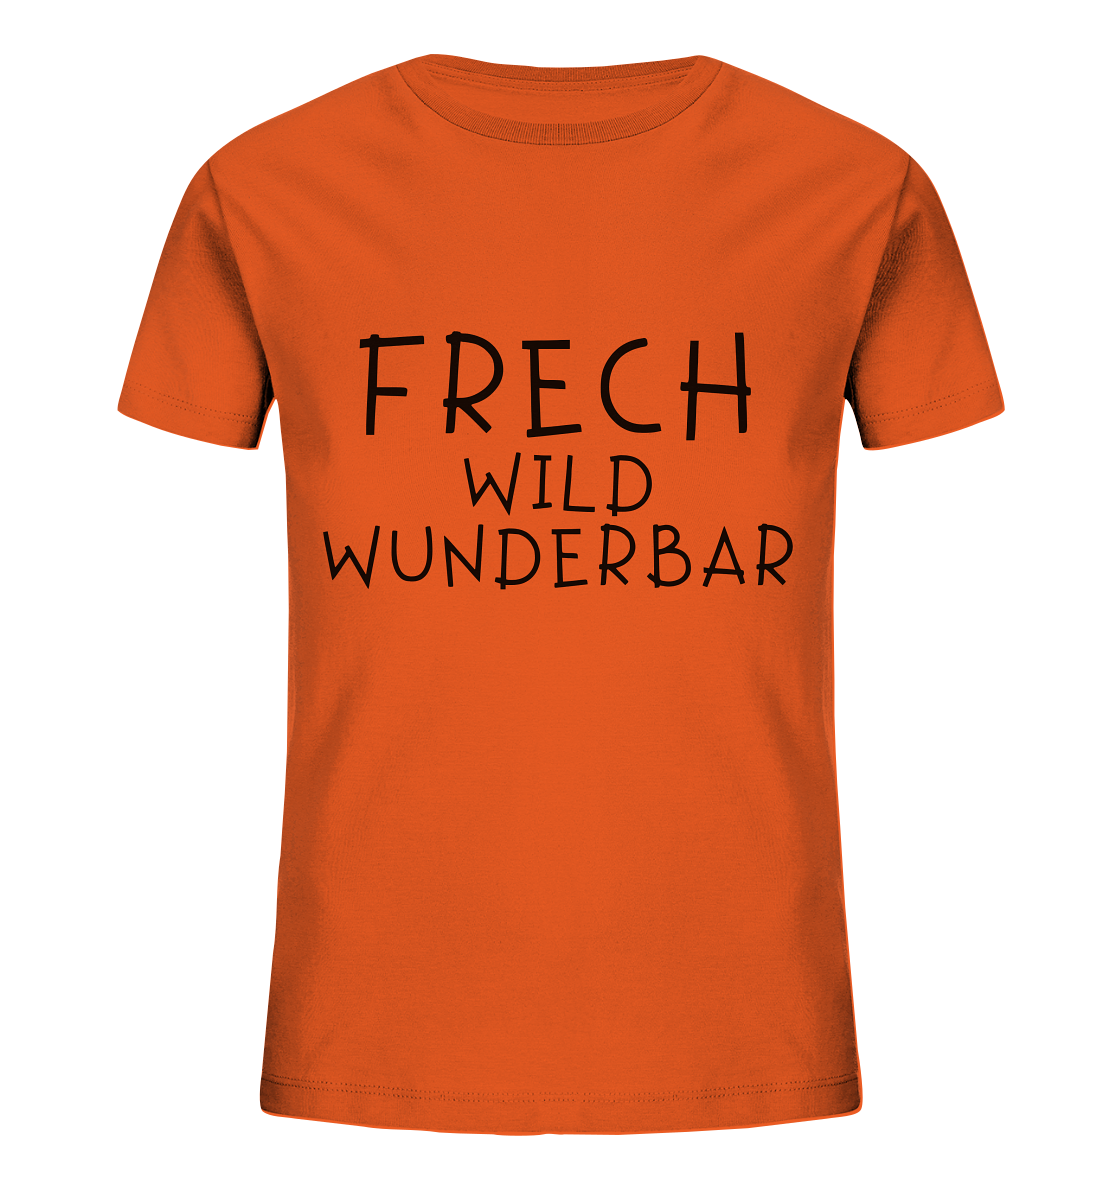 FRECH WILD WUNDERBAR - Kids Organic Shirt